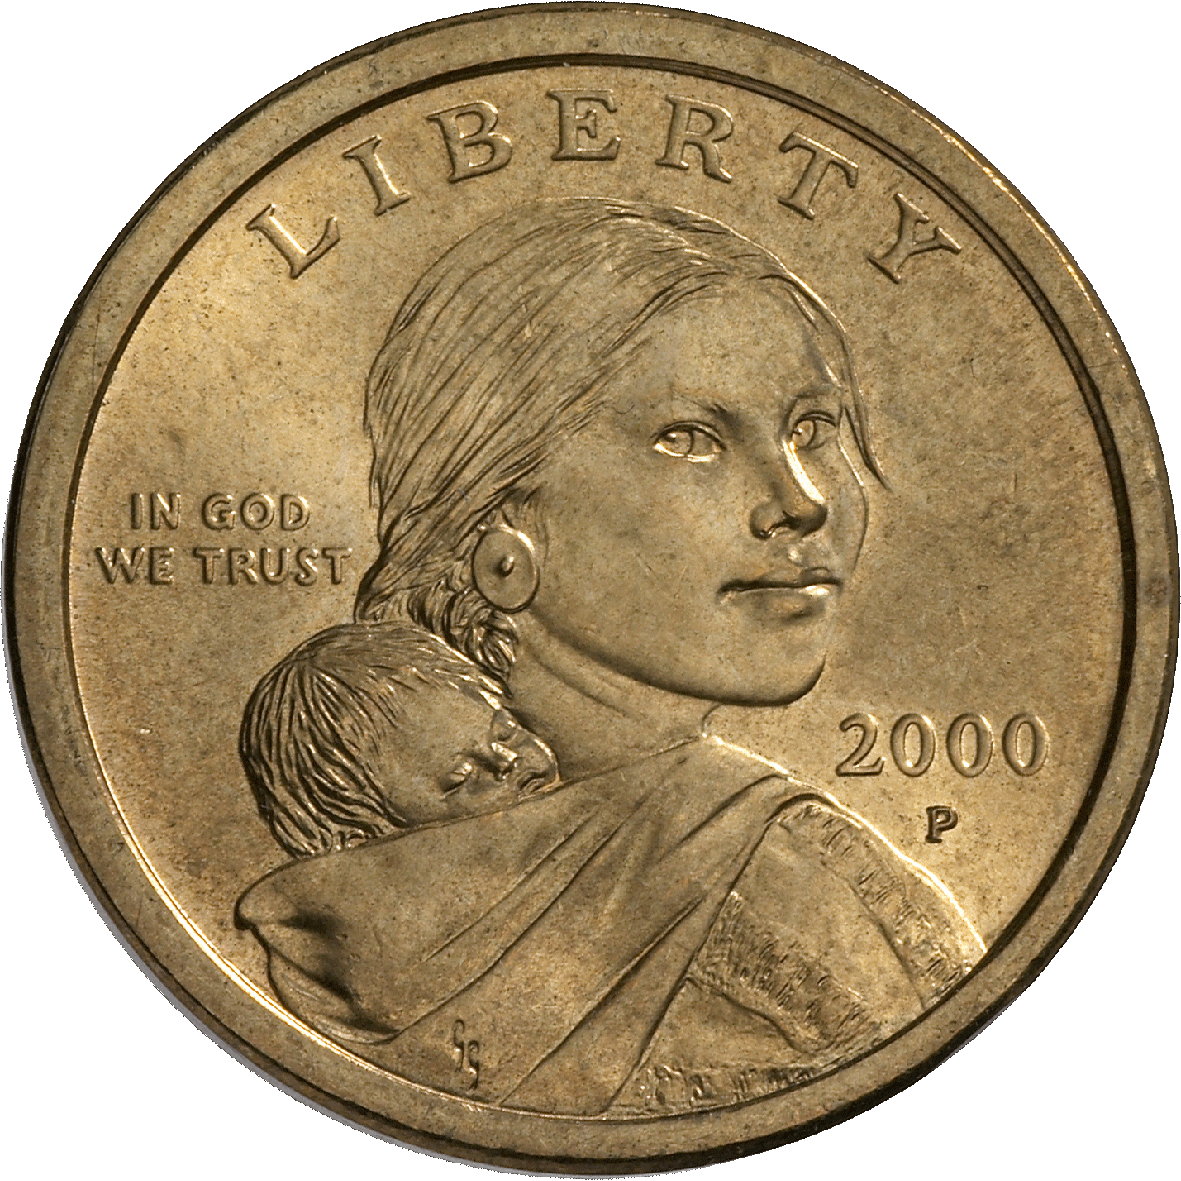 United States of America, 1 Dollar 2000 (obverse)